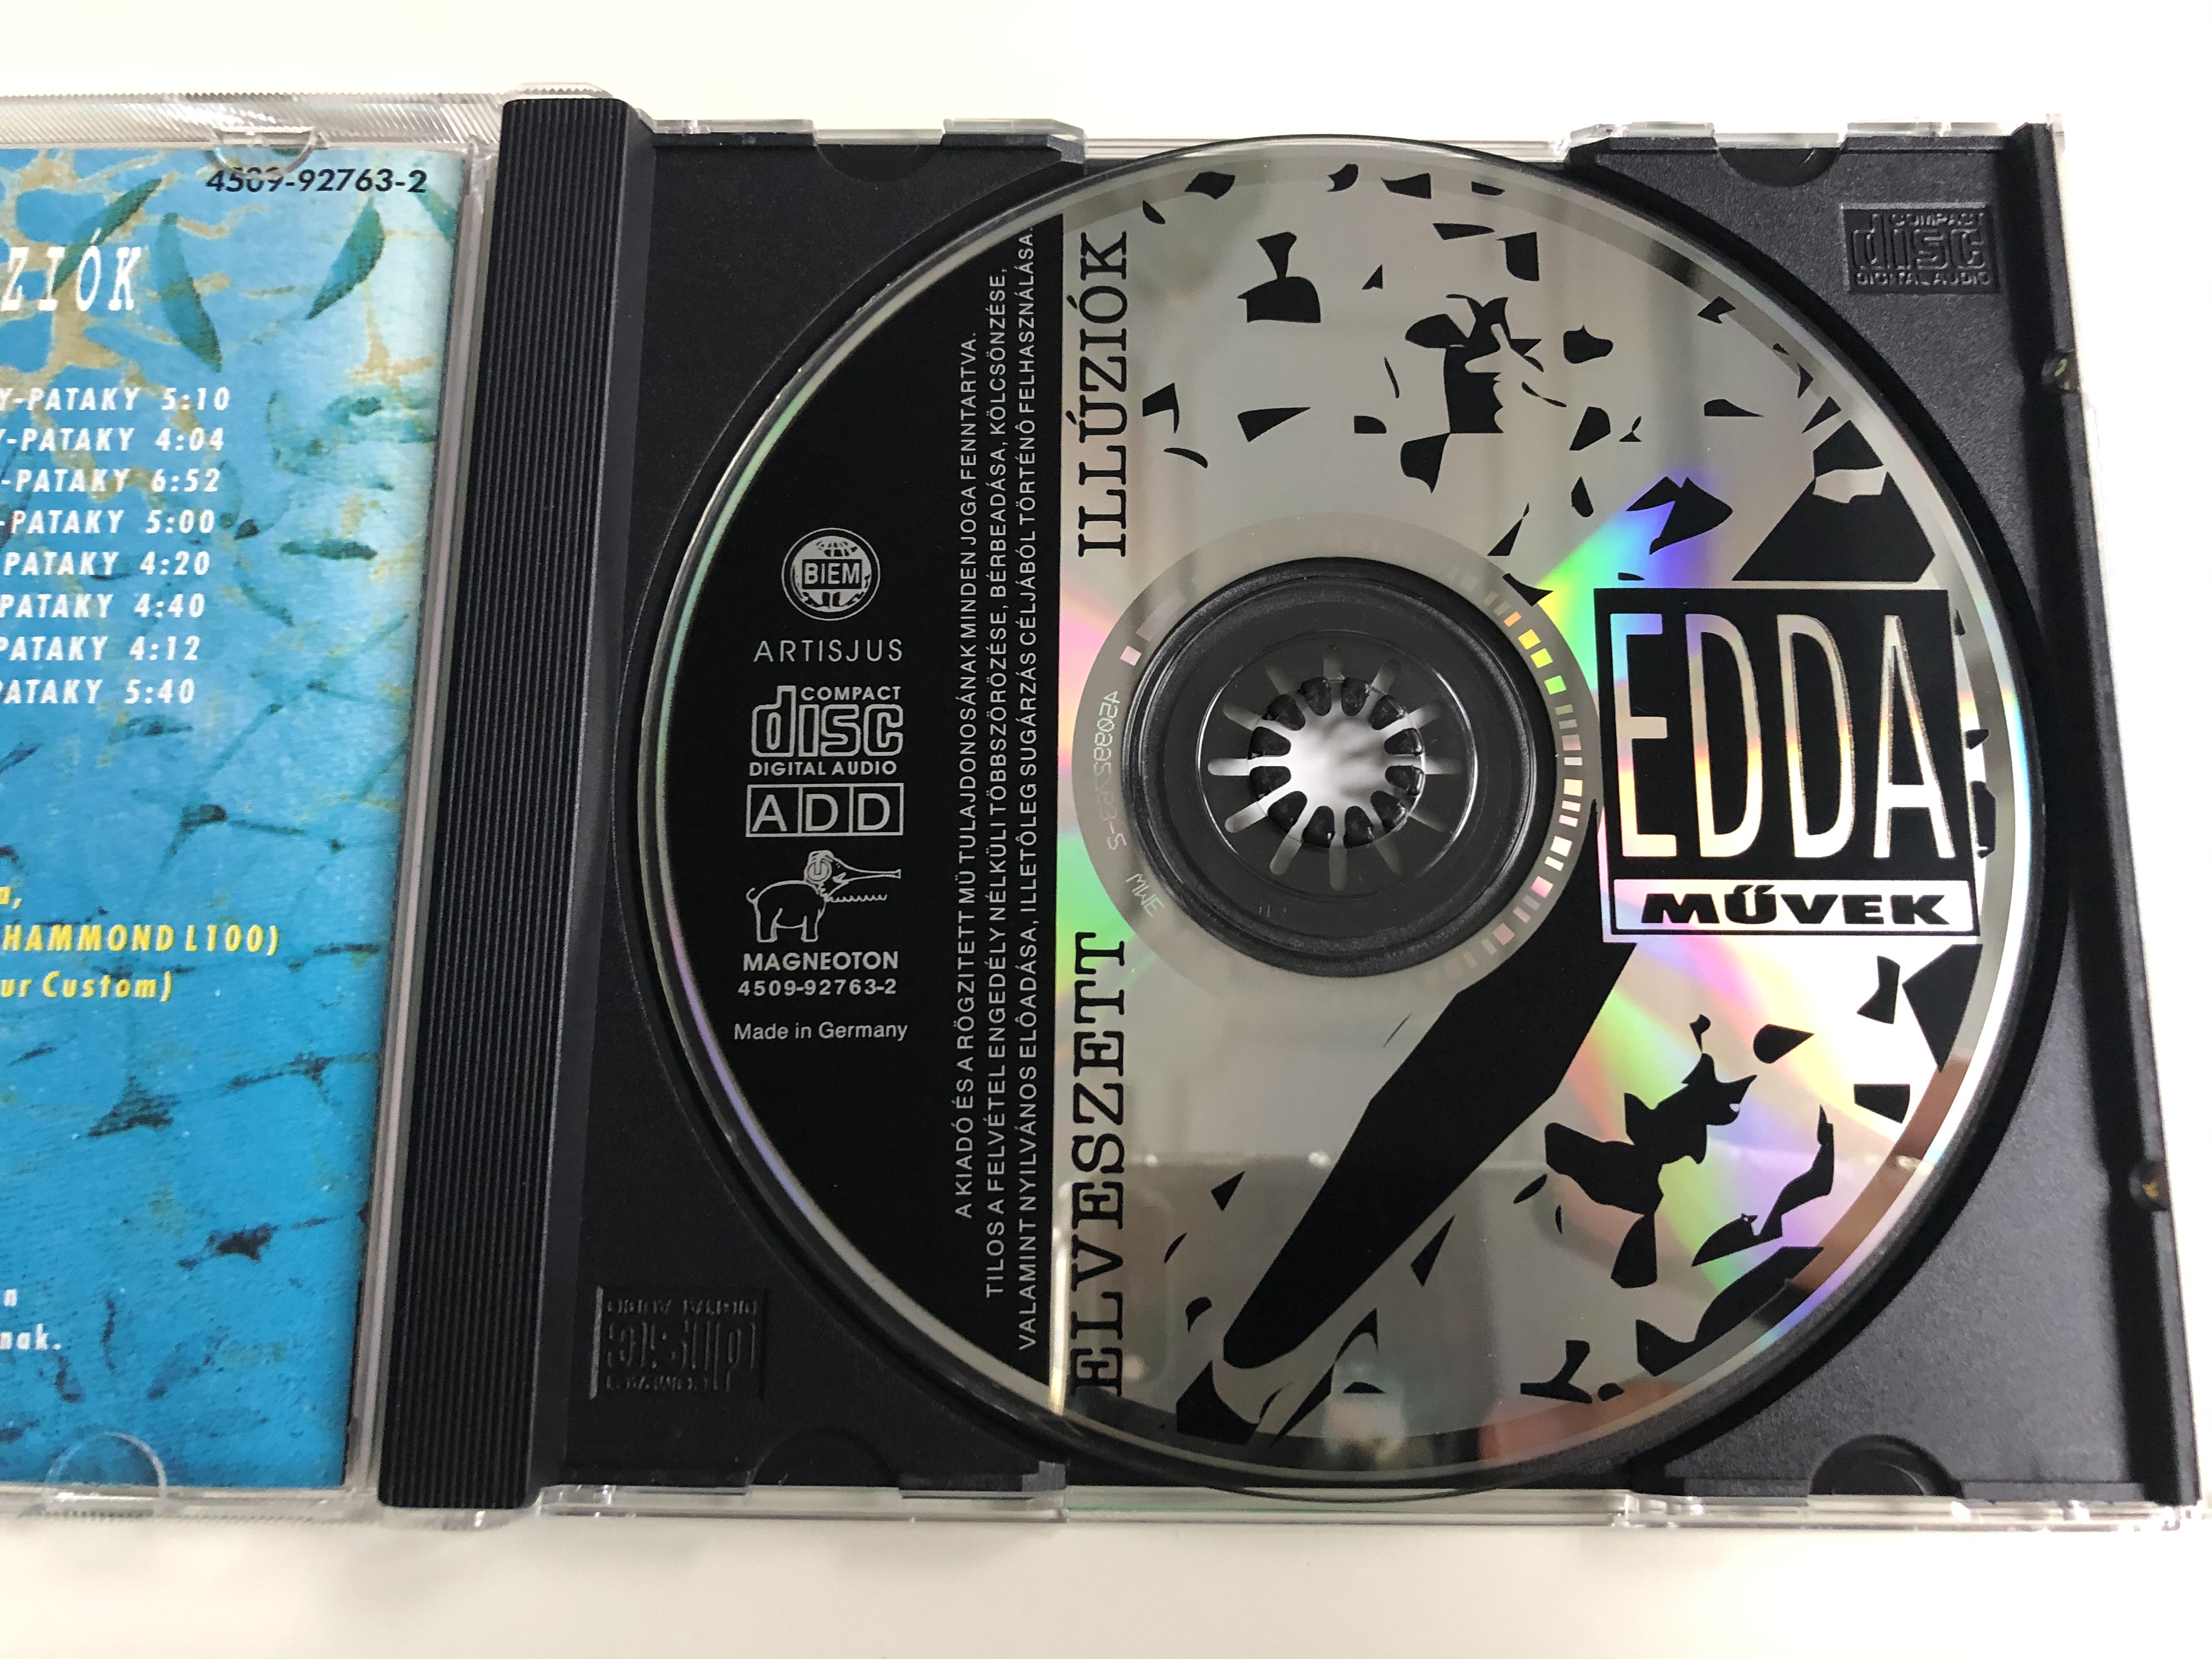 edda-m-vek-15.-elveszett-ill-zi-k-magneoton-audio-cd-1993-4509-92763-2-5-.jpg